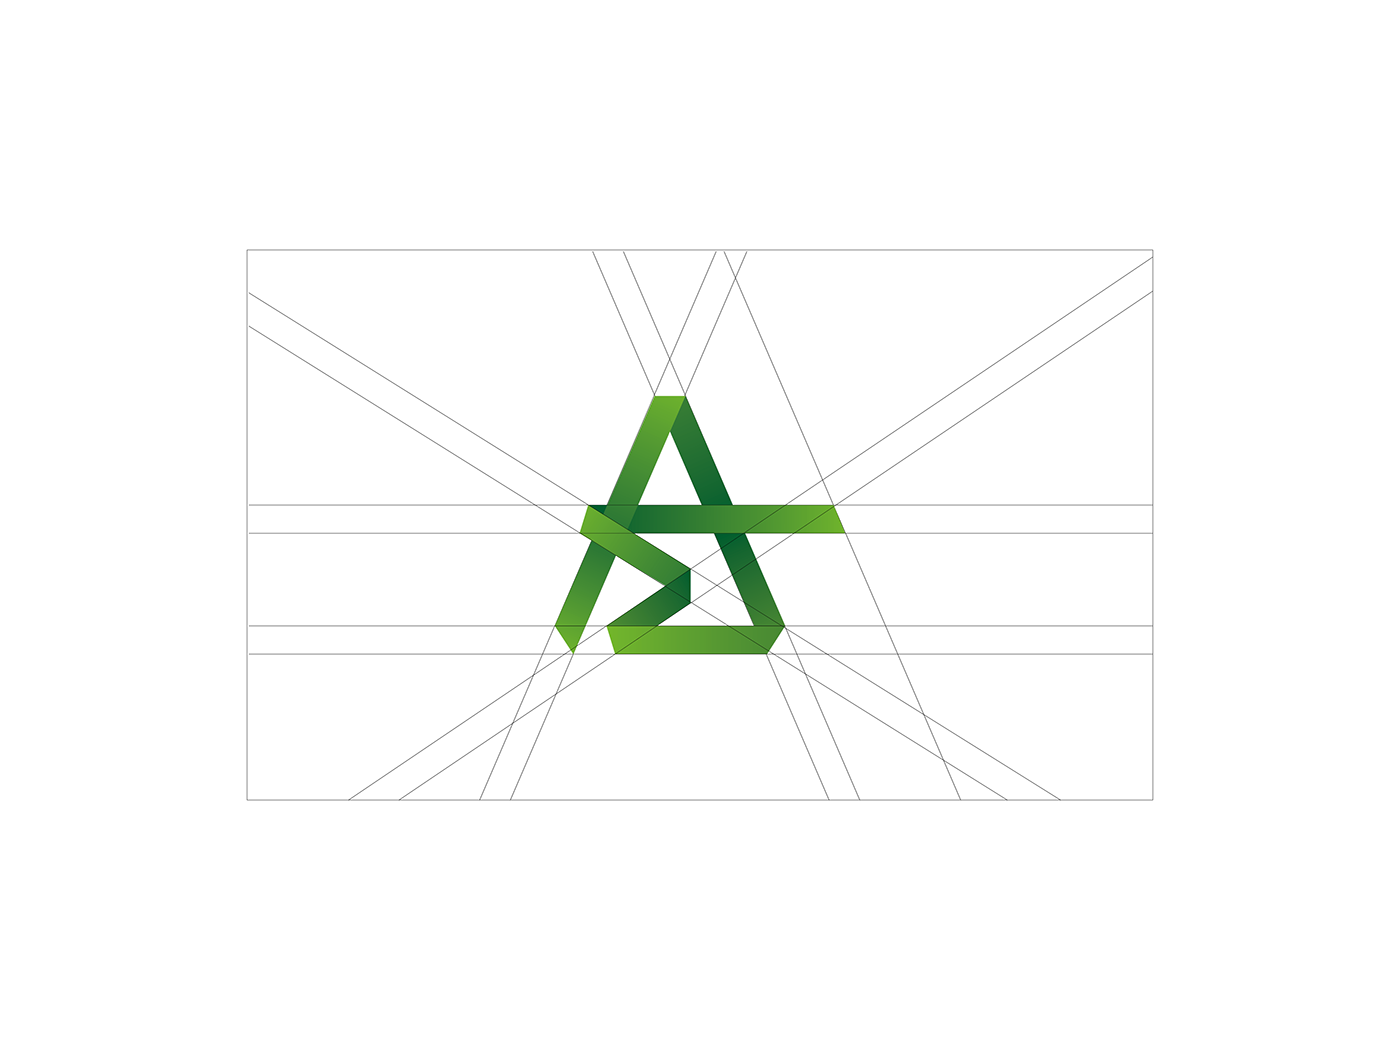 architect brand corporate image coordinate image business card Logo Design logo letterhead bioarchitecture green Ecology cool studio